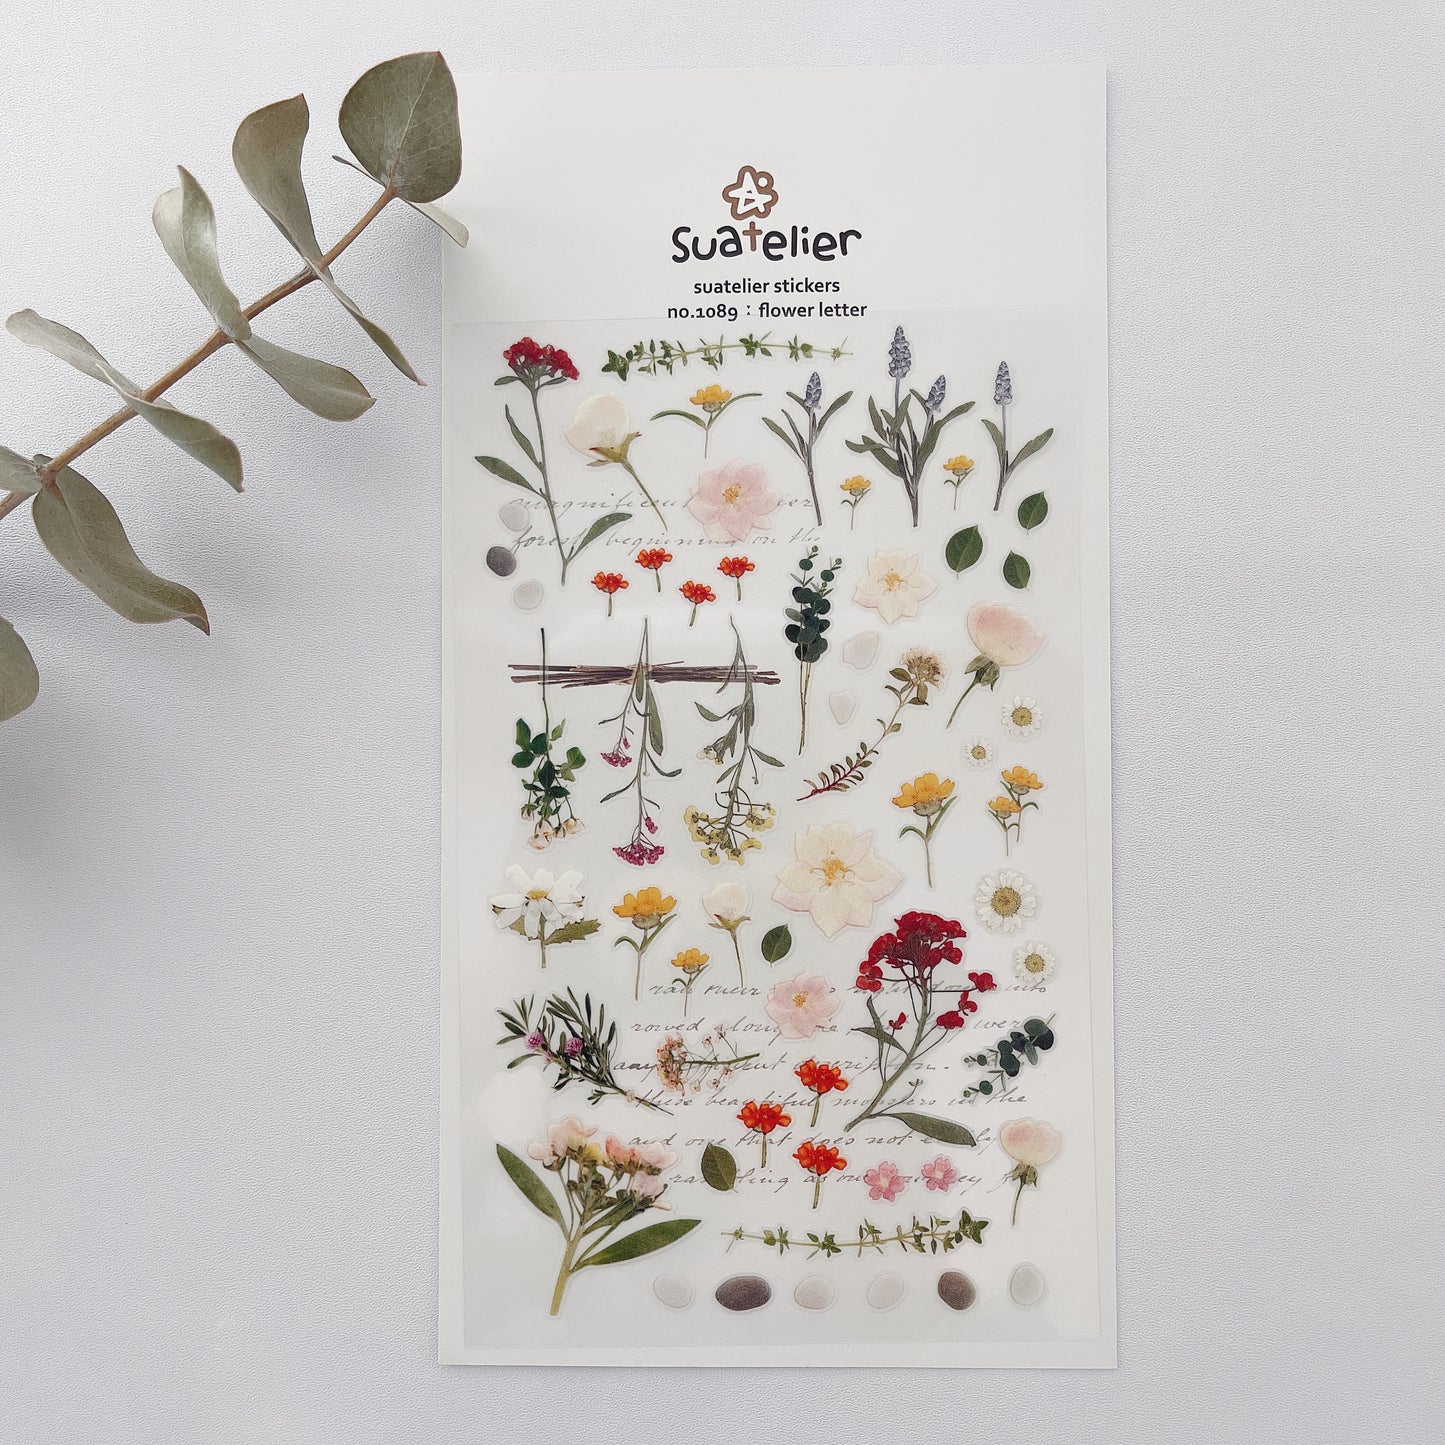 Suatelier Flower Letter Sticker // no. 1089